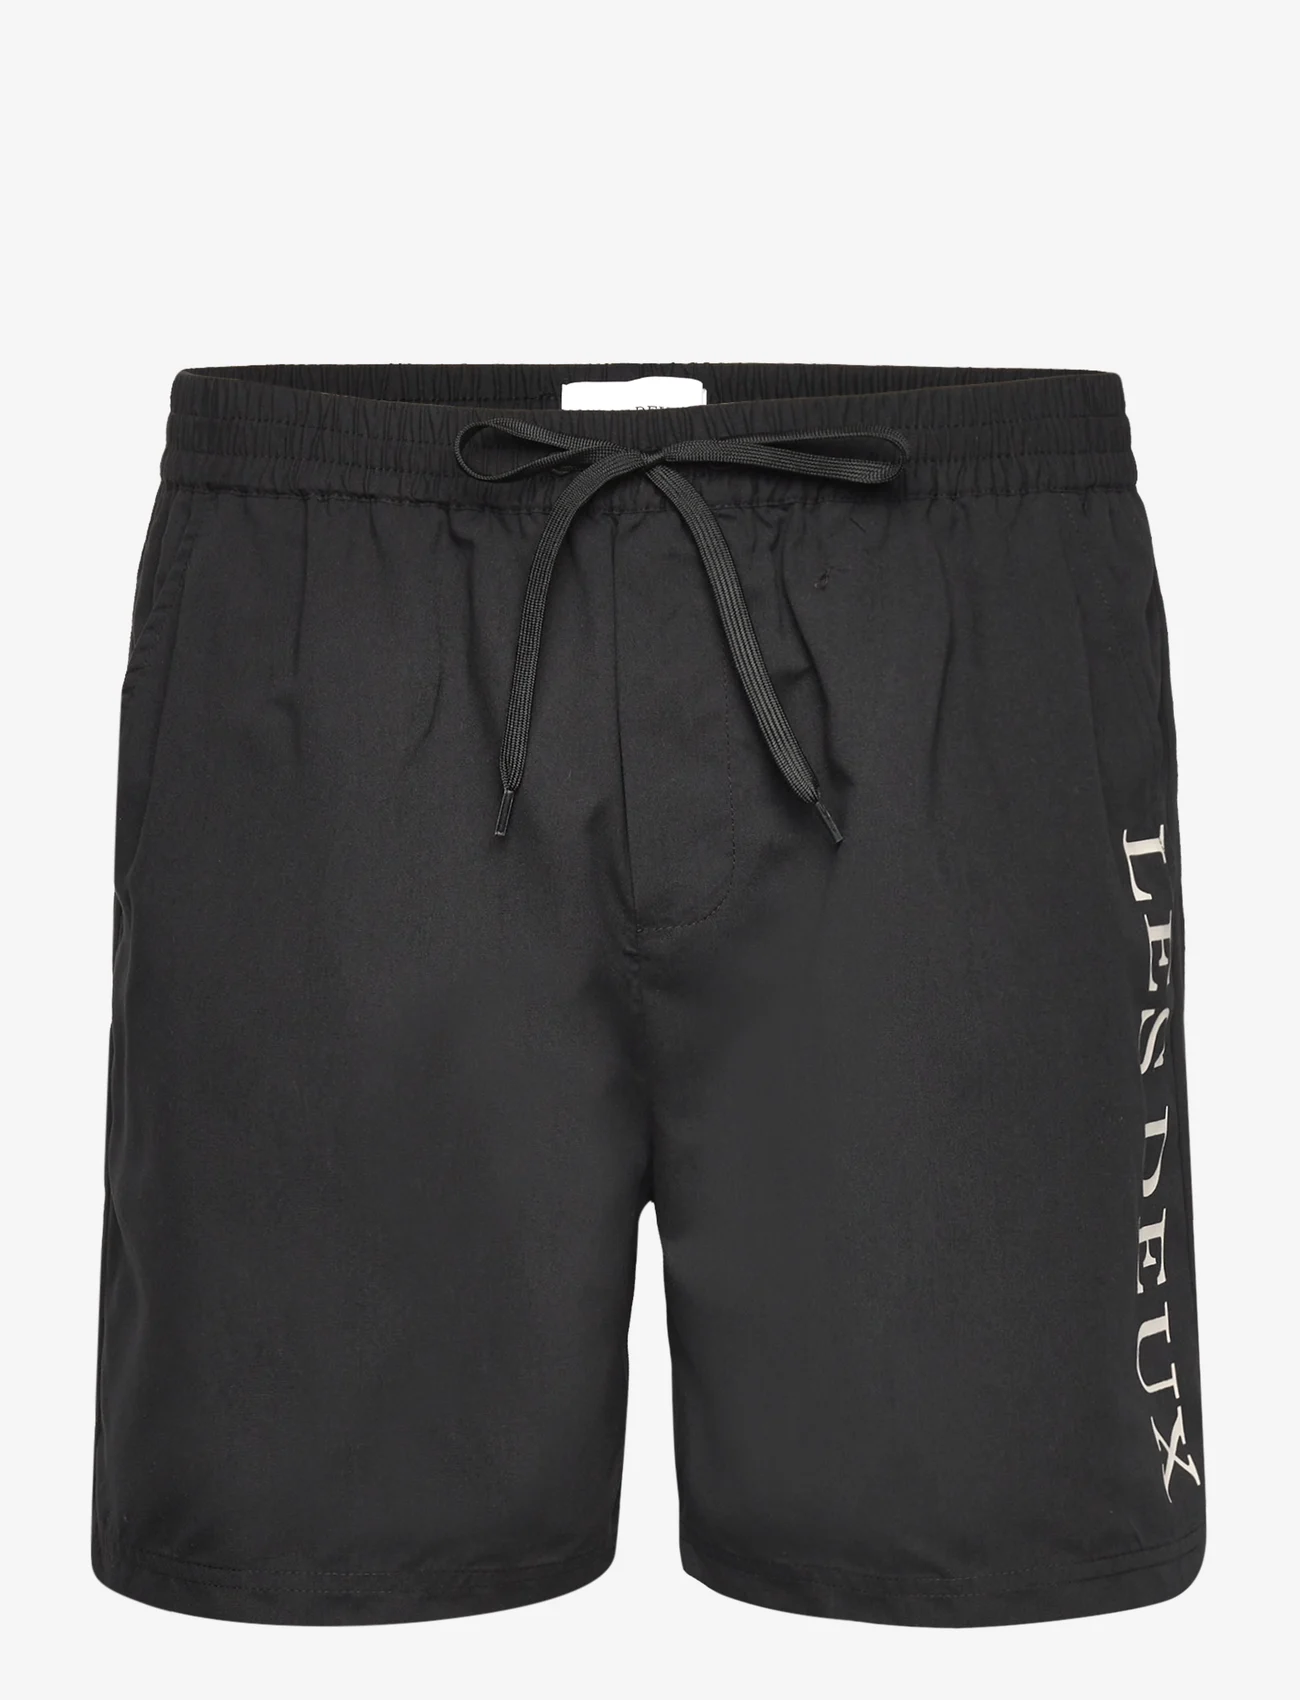 Les Deux - Les Deux Logo Swim Shorts - män - black/ivory - 0